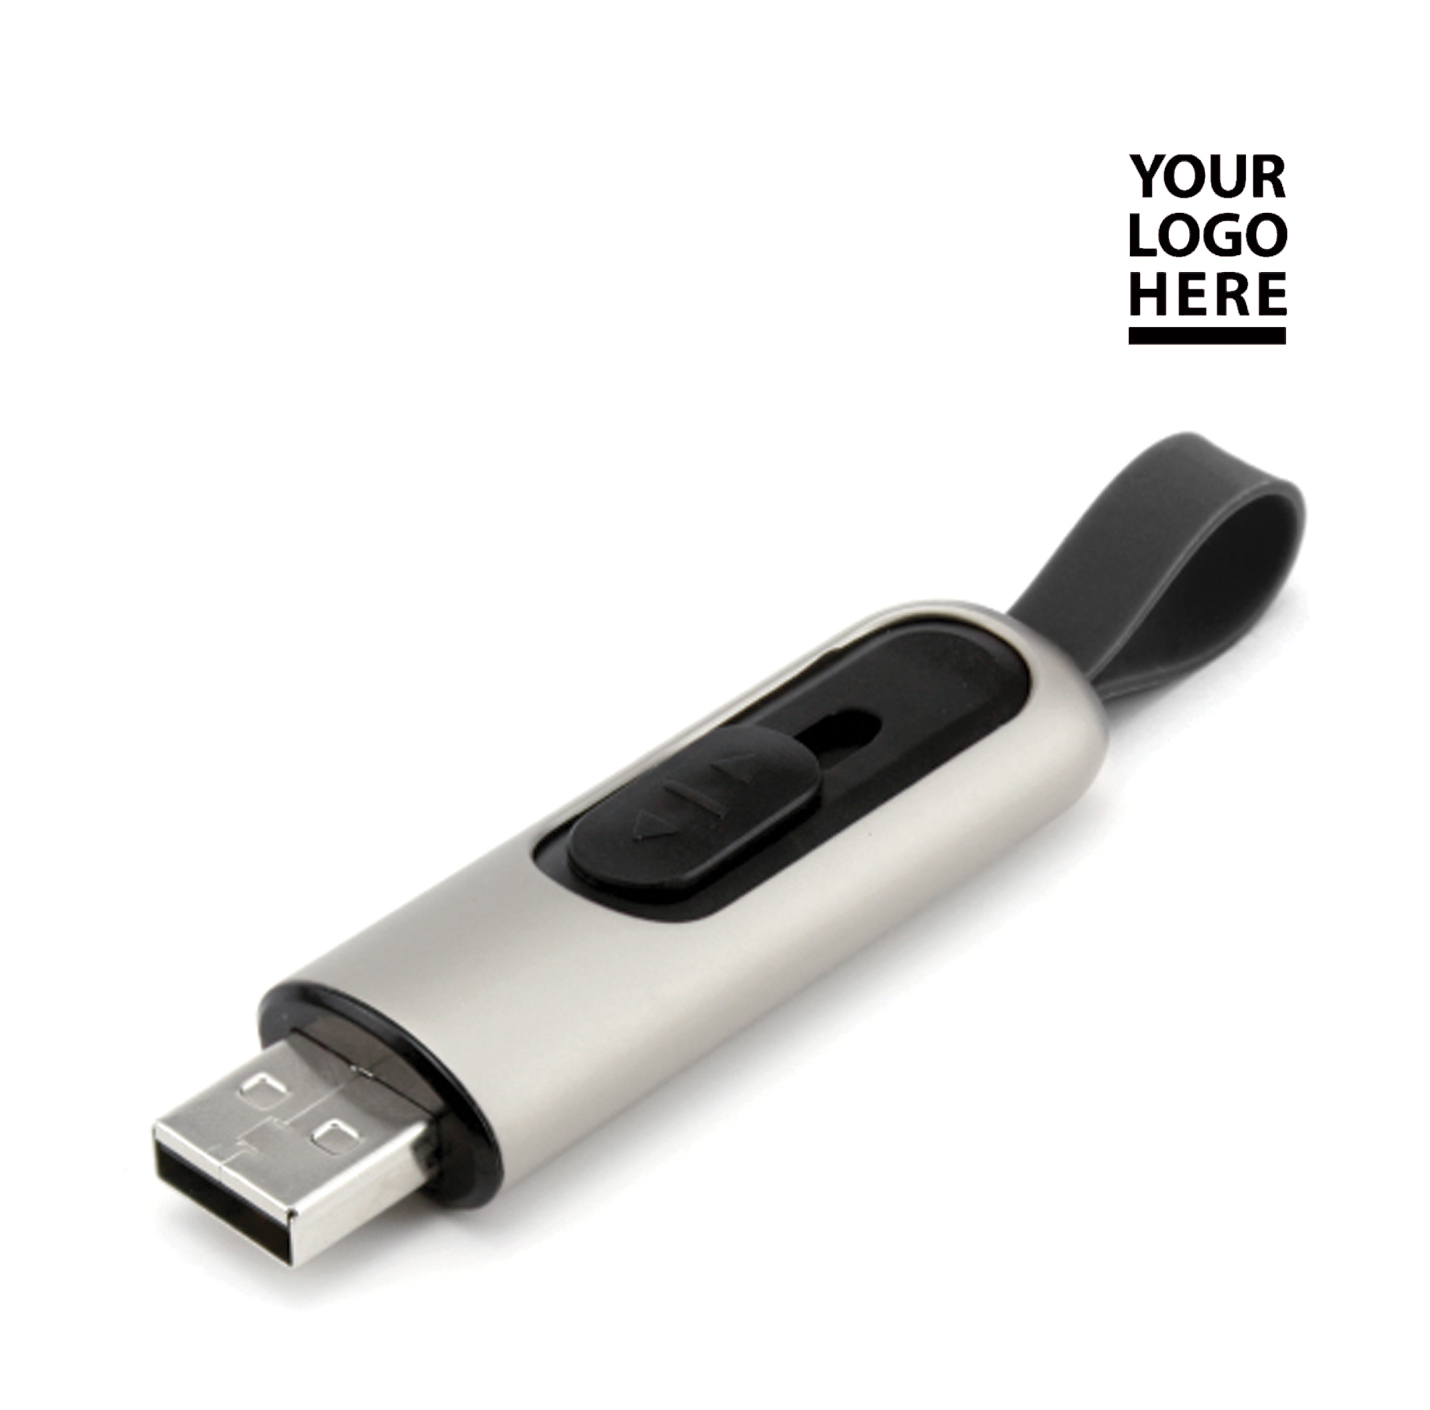 Slide USB with Strap